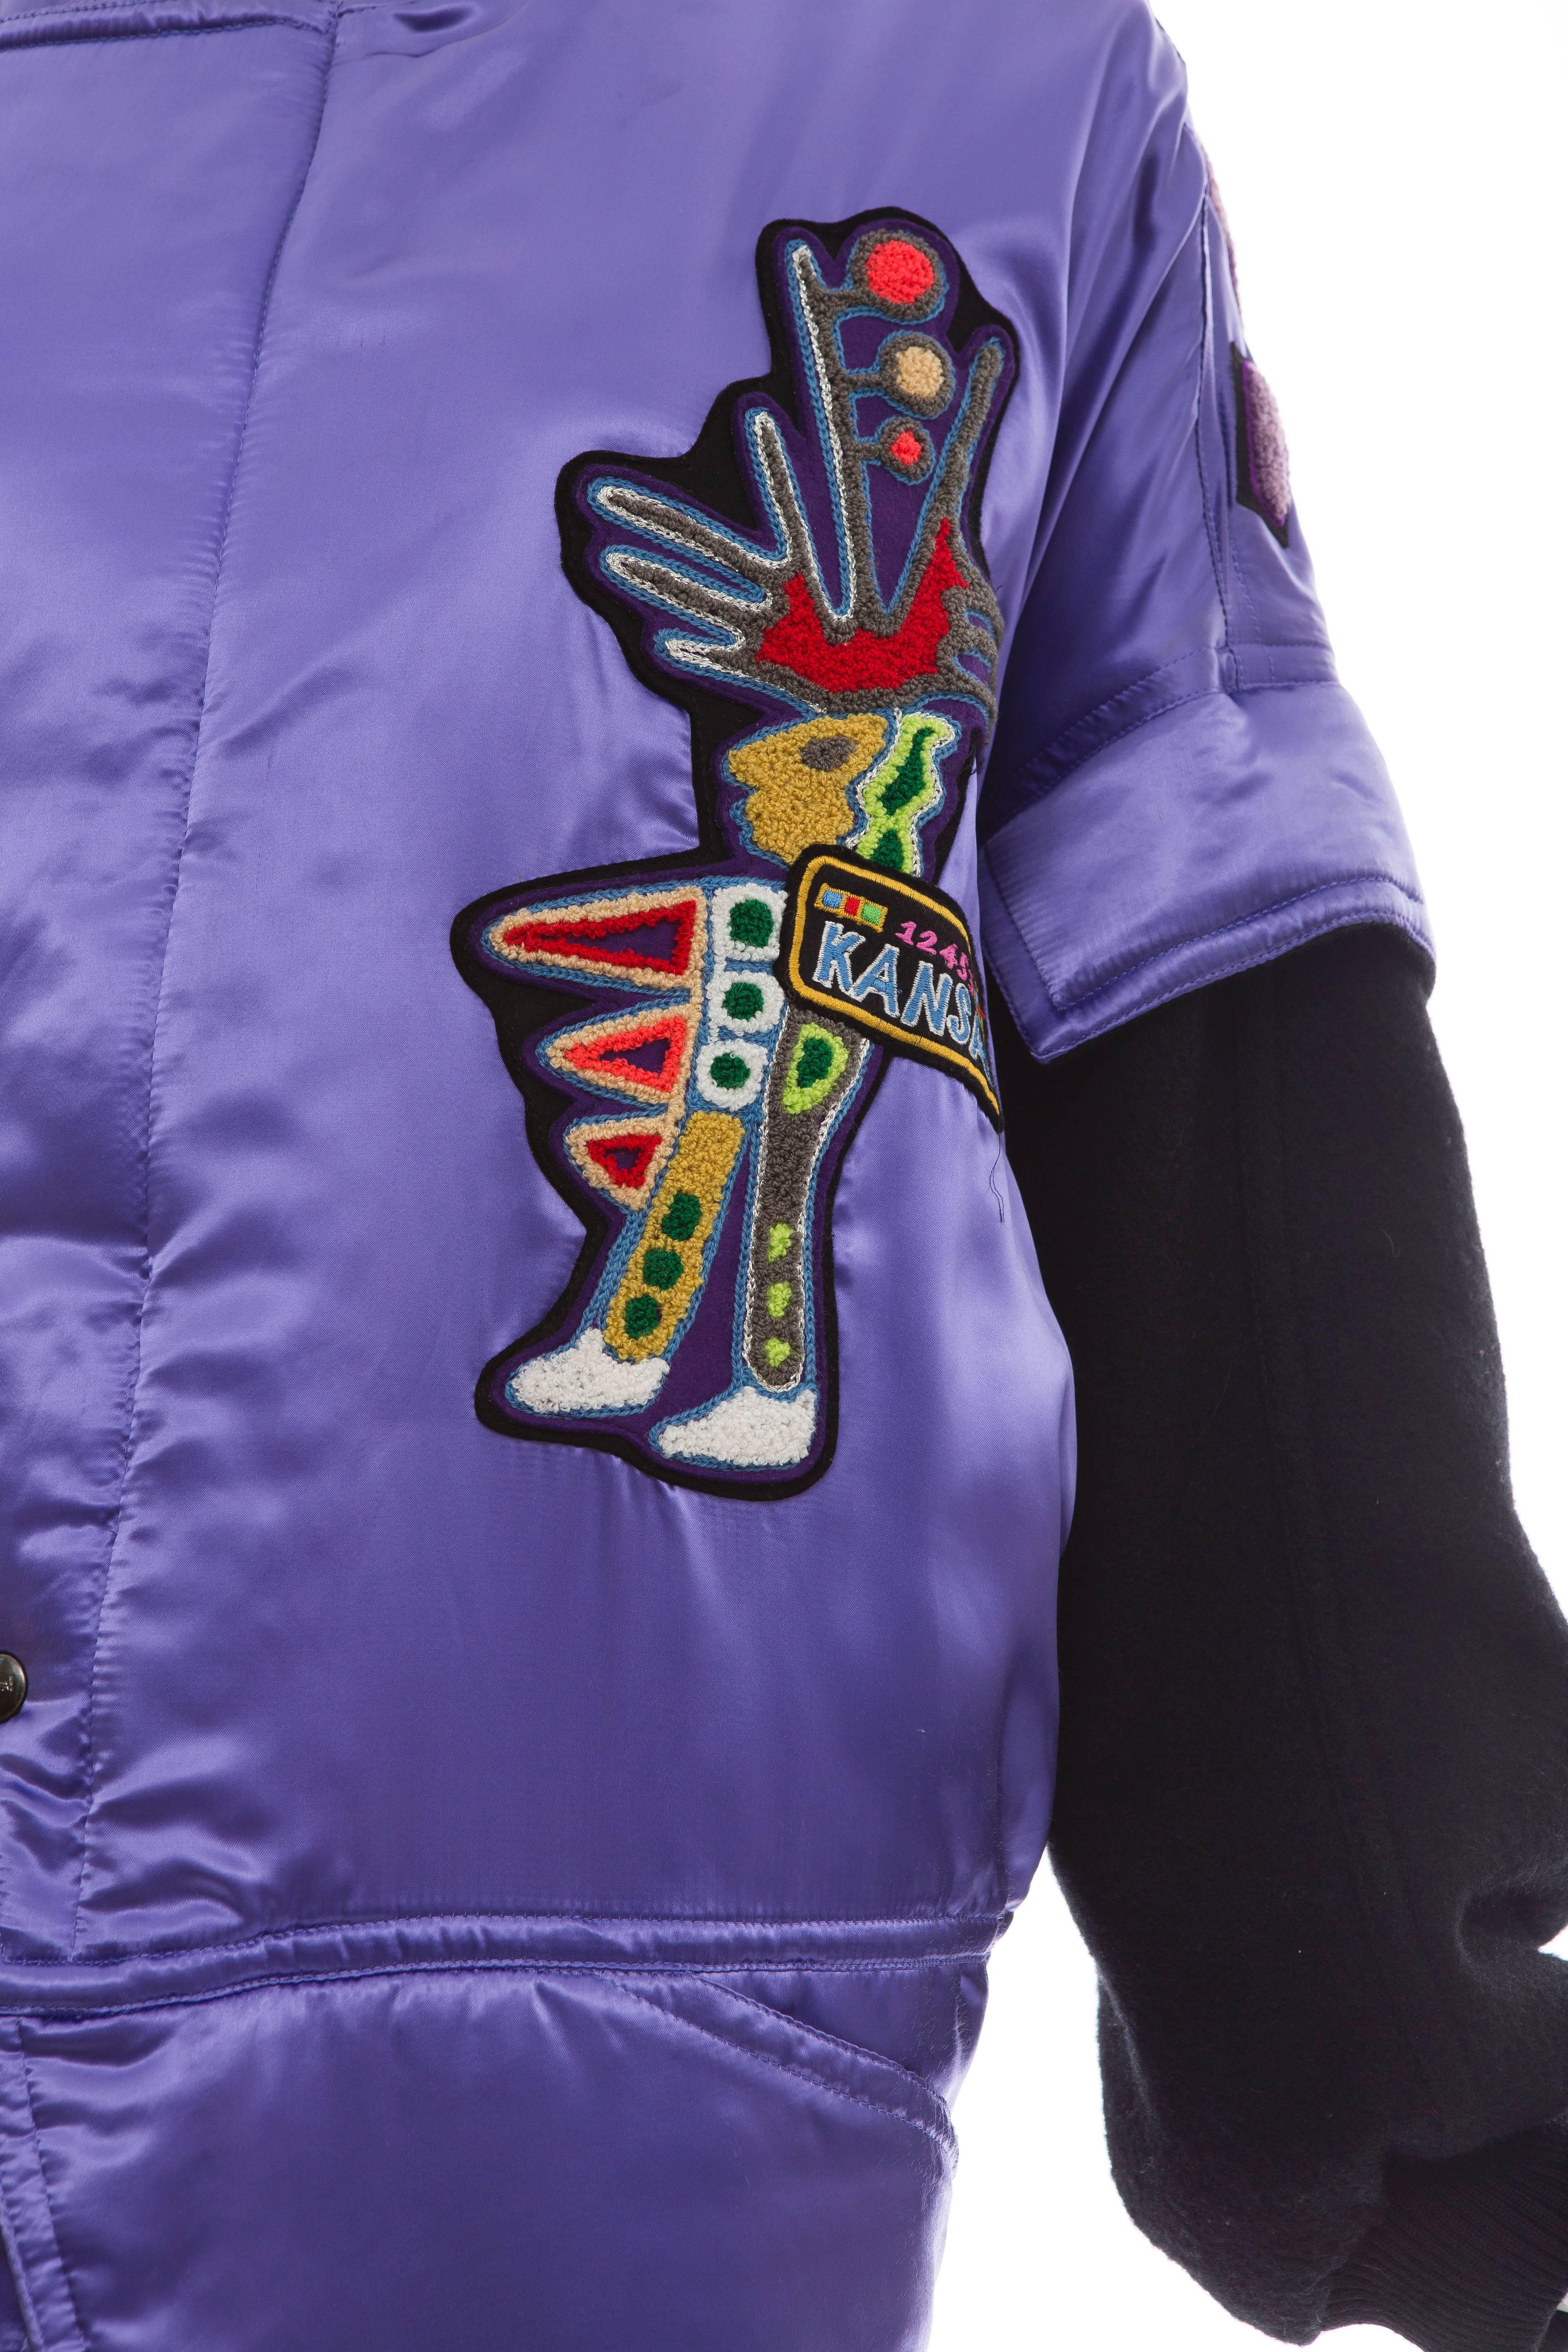 Kansai Yamamoto Purple Satin Jacket With Appliquéd Patches, Circa 1980's For Sale 1